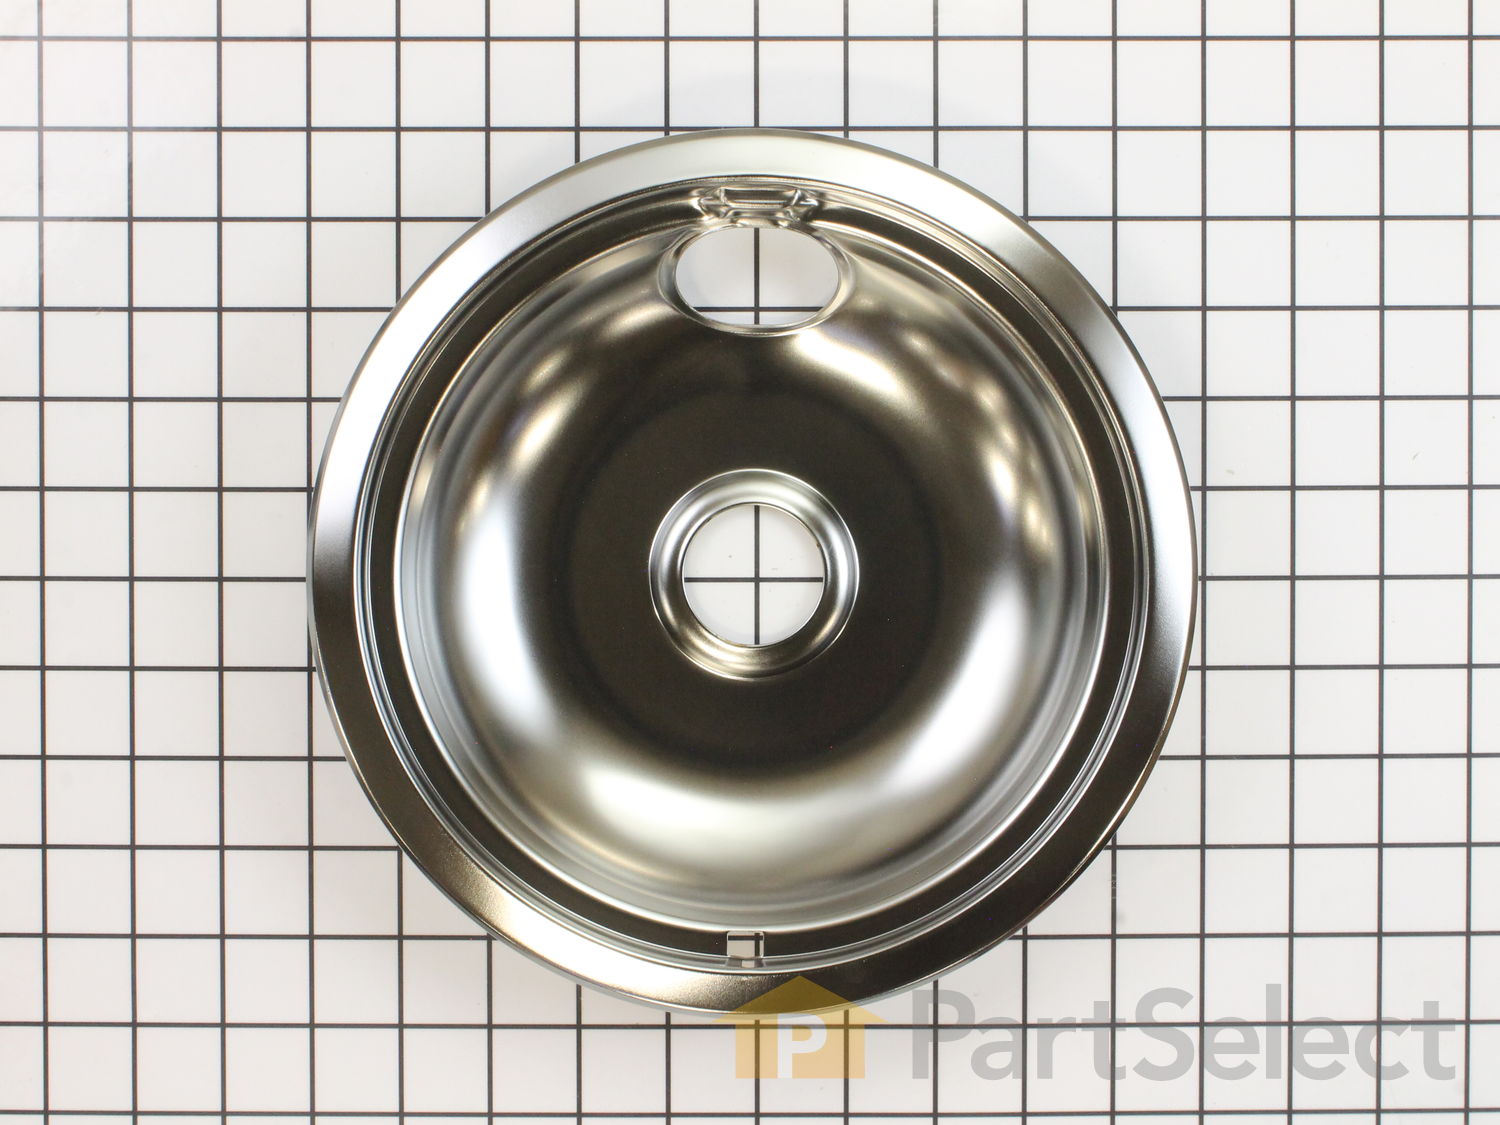 Whirlpool Magic Chef Maytag Jenn-Air Stove 6" Chrome Drip Pan Bowl W10196406RW 